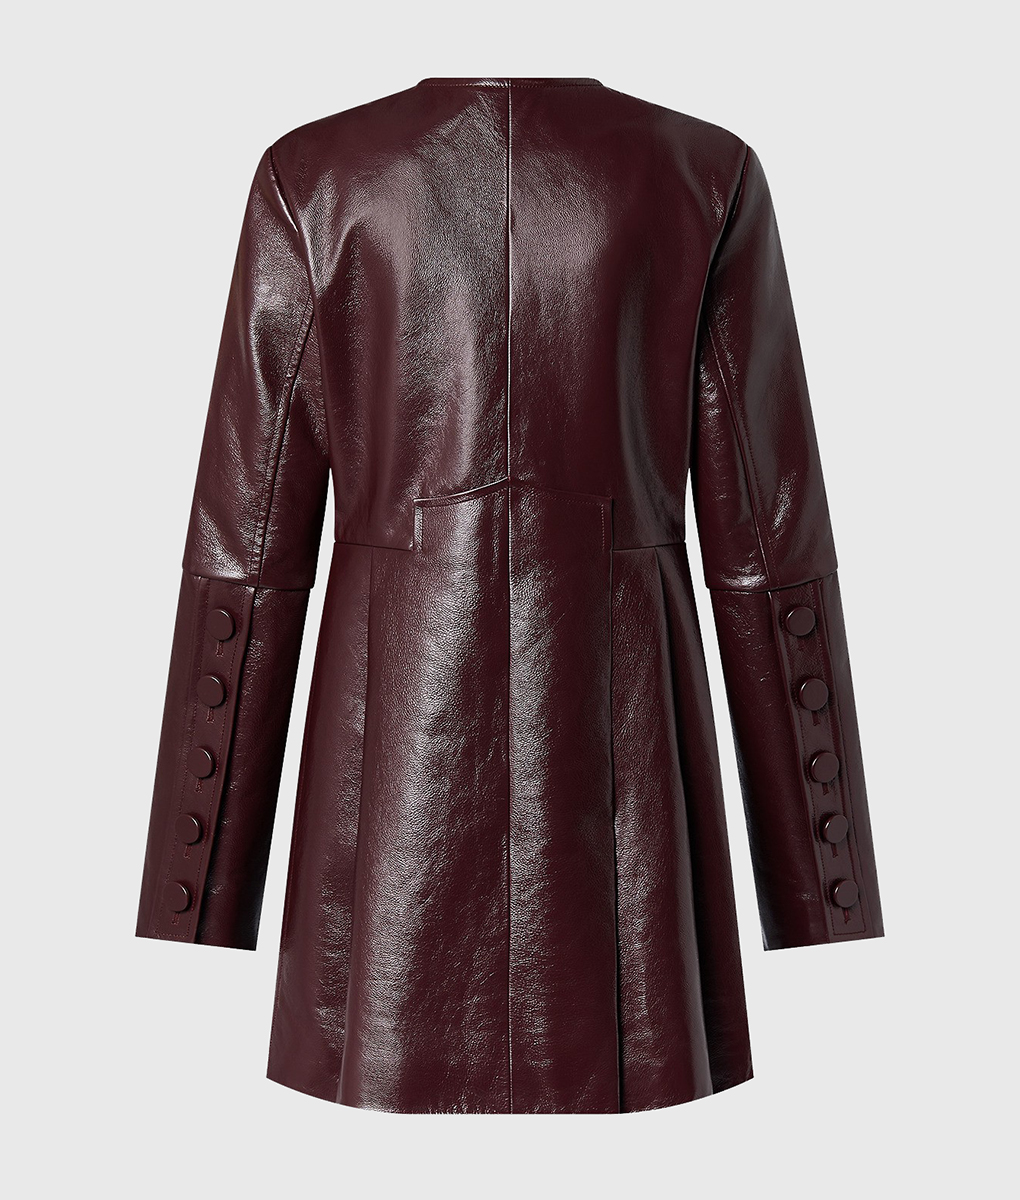 Hannah Einbinder Maroon Leather Coat (4)